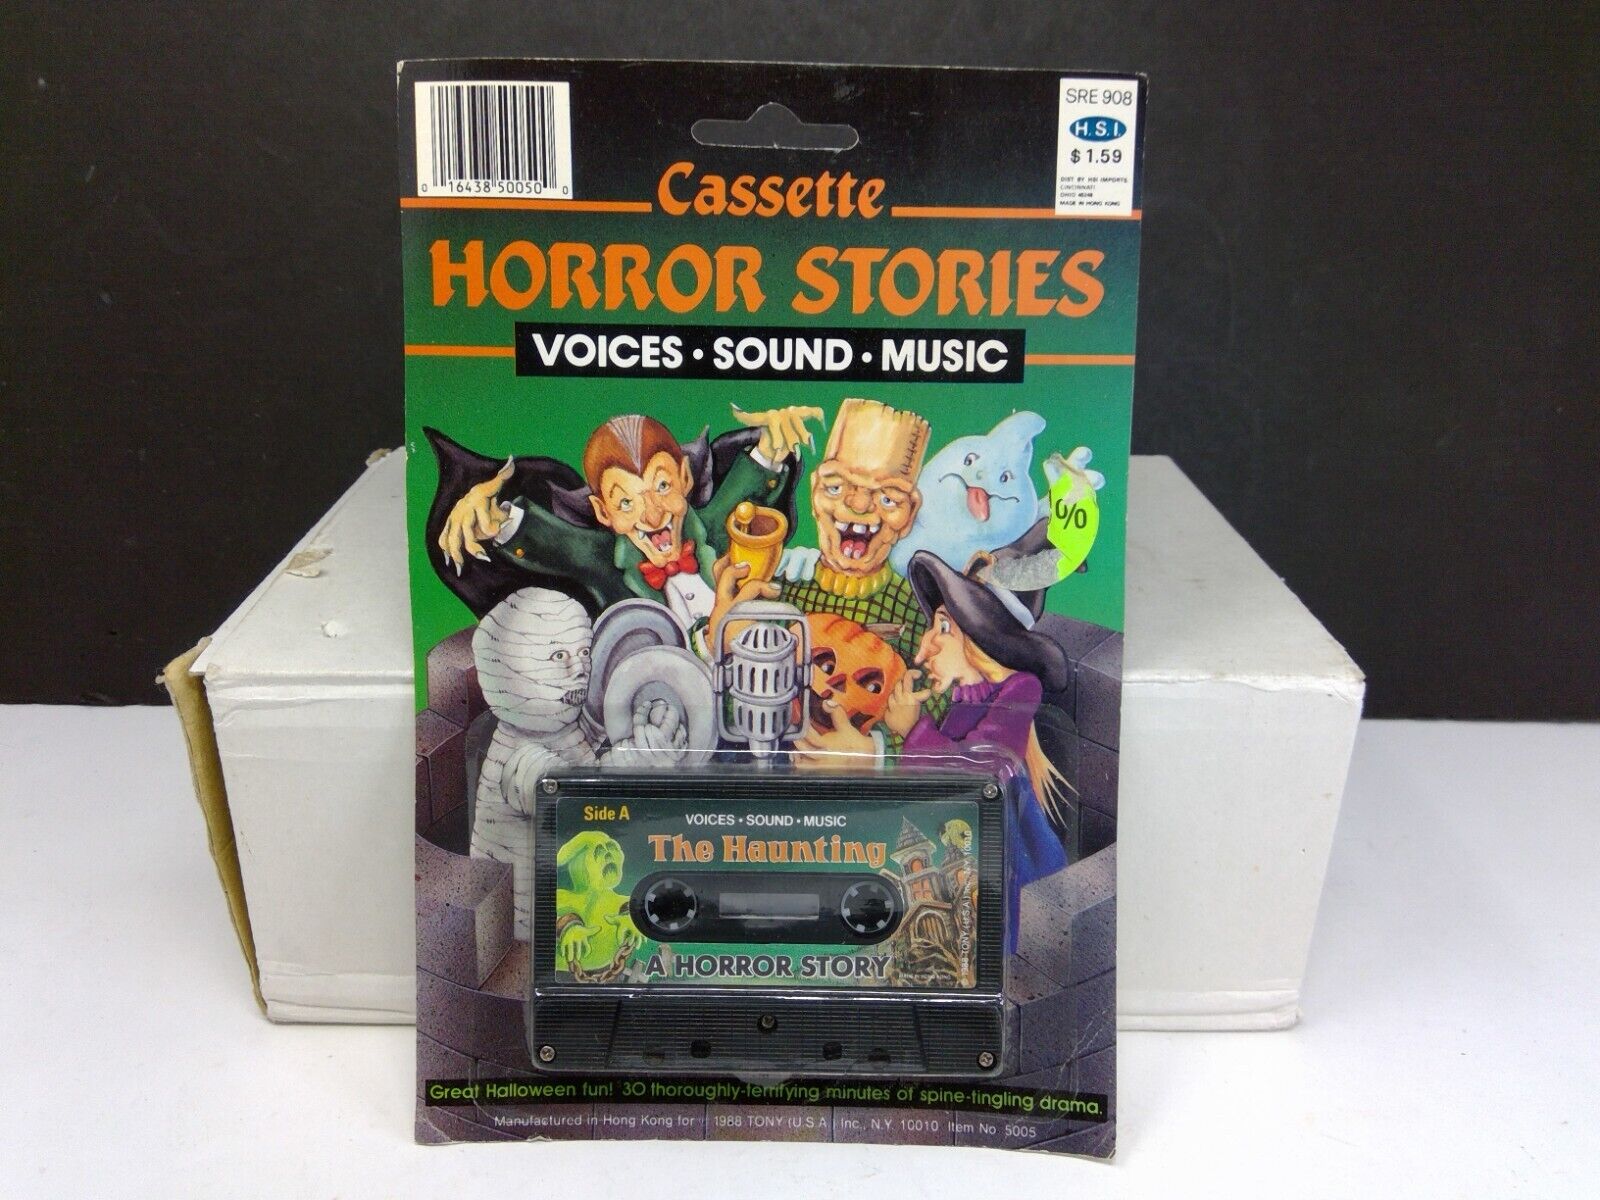 NOS Vintage 1988 Tony Horror Stories Cassette - The Haunting Voices Sounds Music